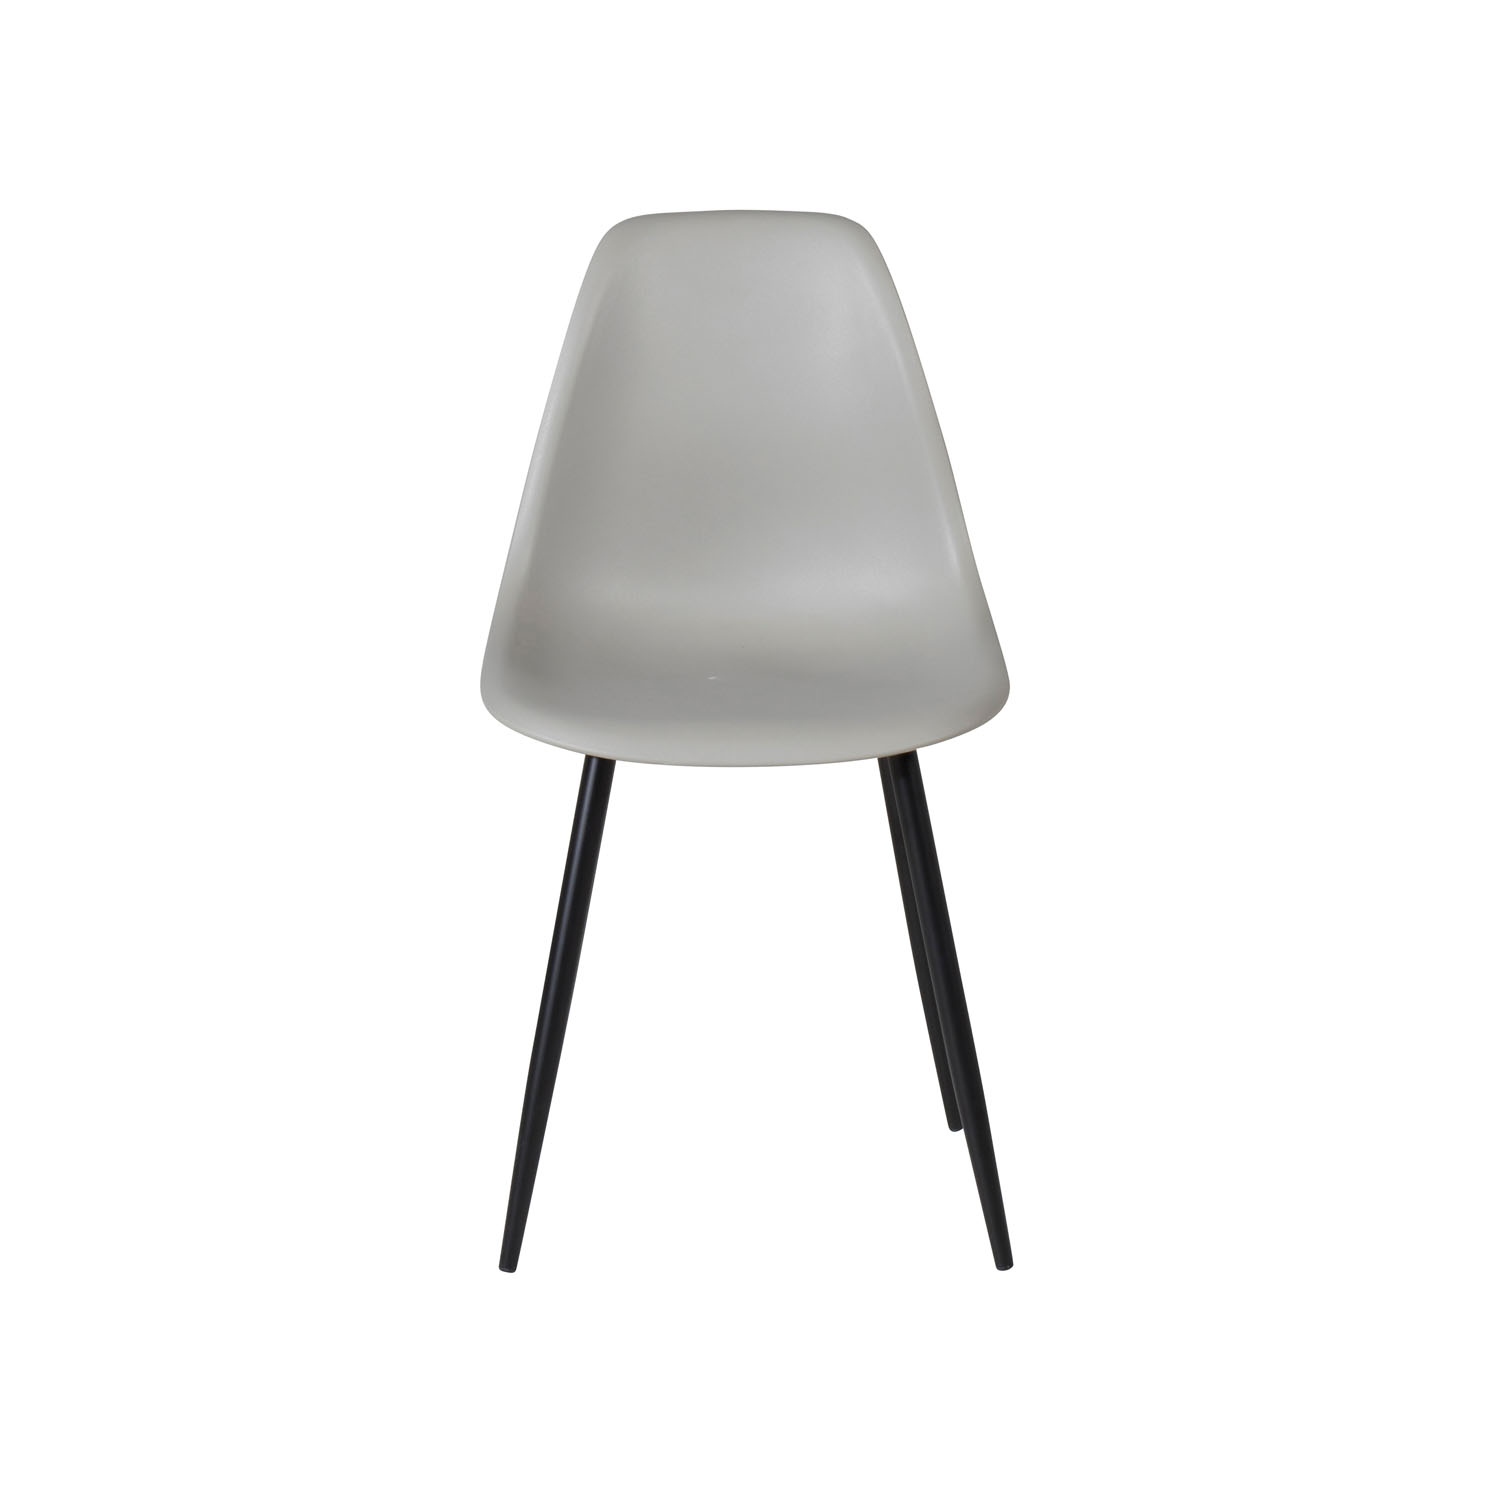 VENTURE DESIGN Polar Plastic spisebordsstol - grå plastik og sort metal